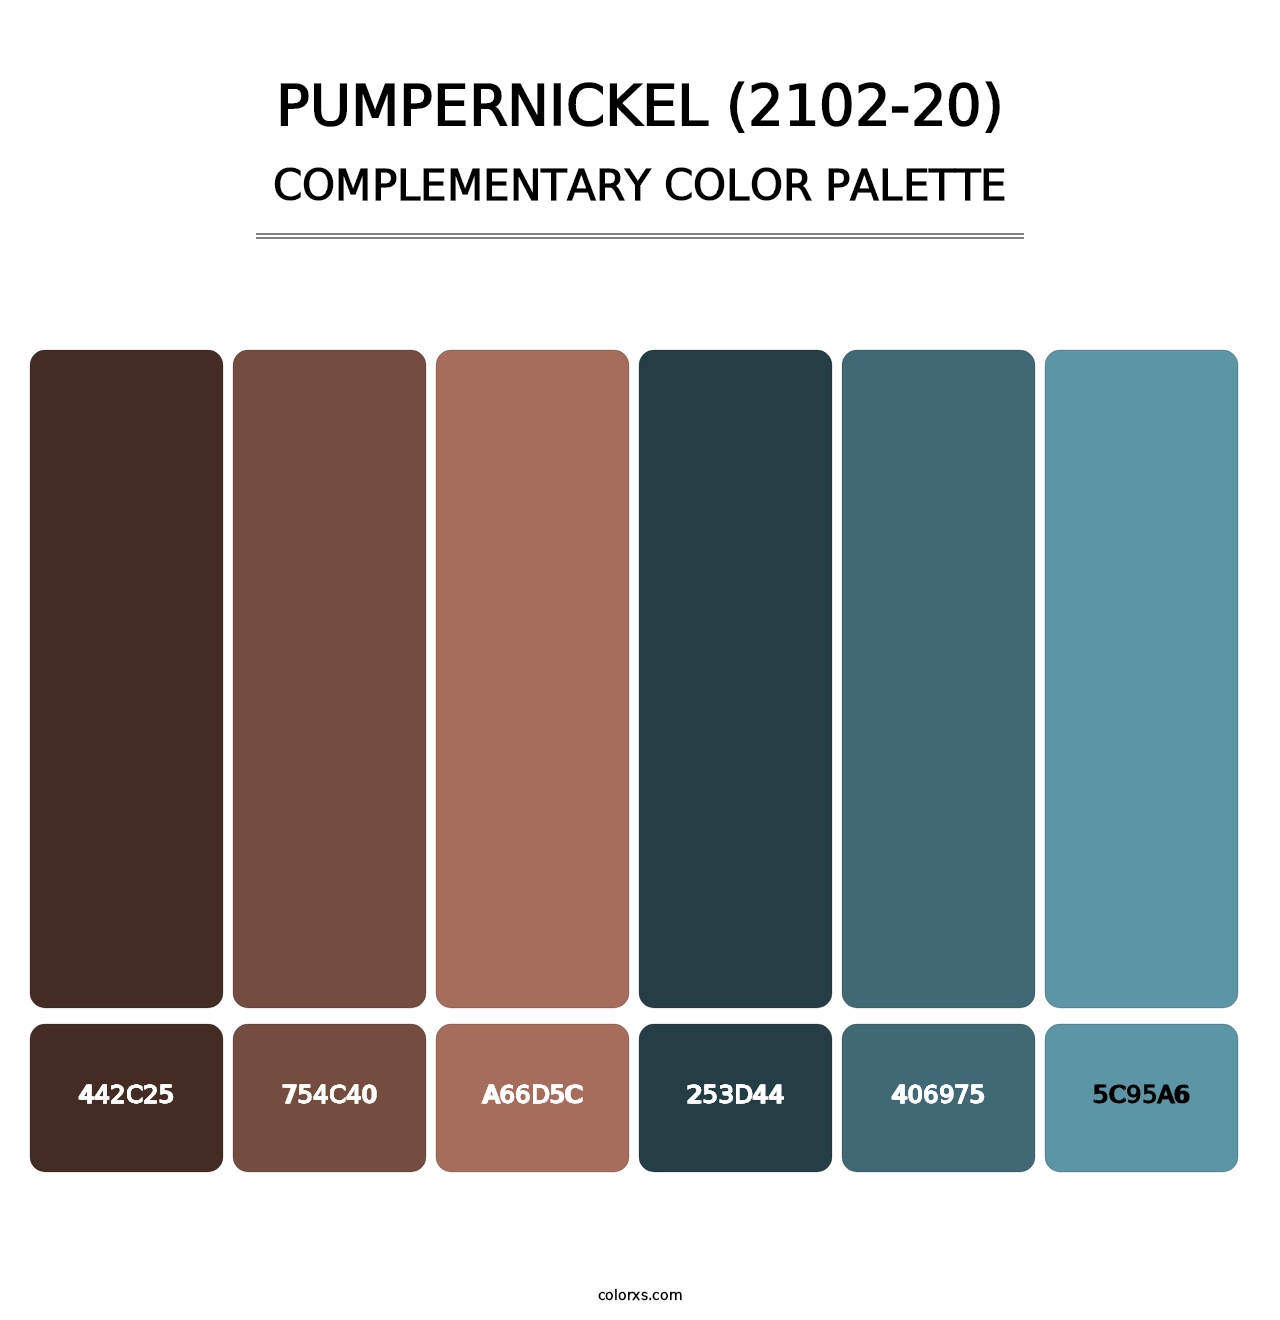 Pumpernickel (2102-20) - Complementary Color Palette